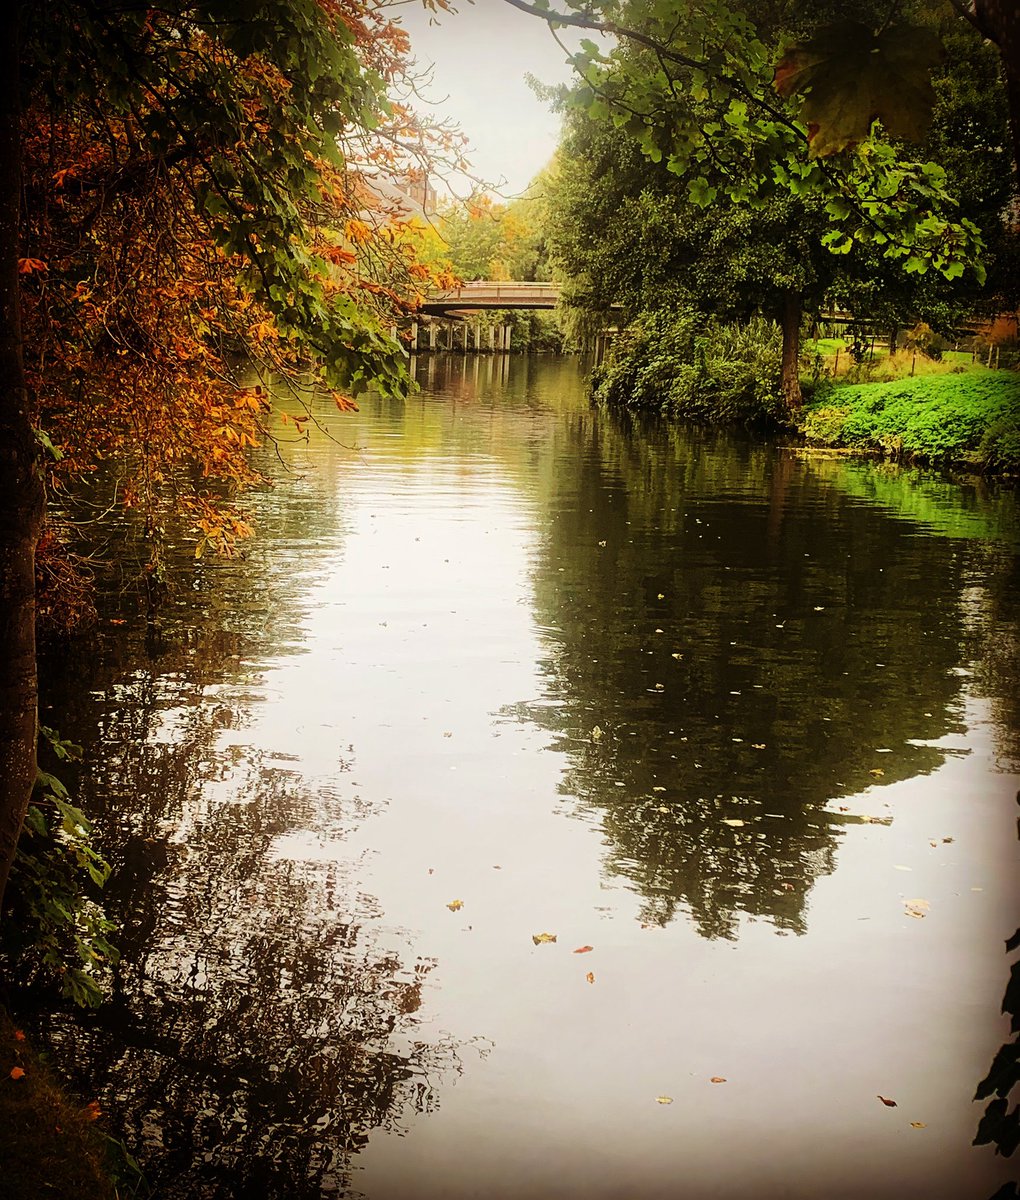 Autumnal walk by the river today 🍁🍂#riverwensumnorwich #norwich #riverwalks #autumn #sundaystroll #norwichlife #beauty #reflections #followtheriver #autumndays  #norfolk #uk